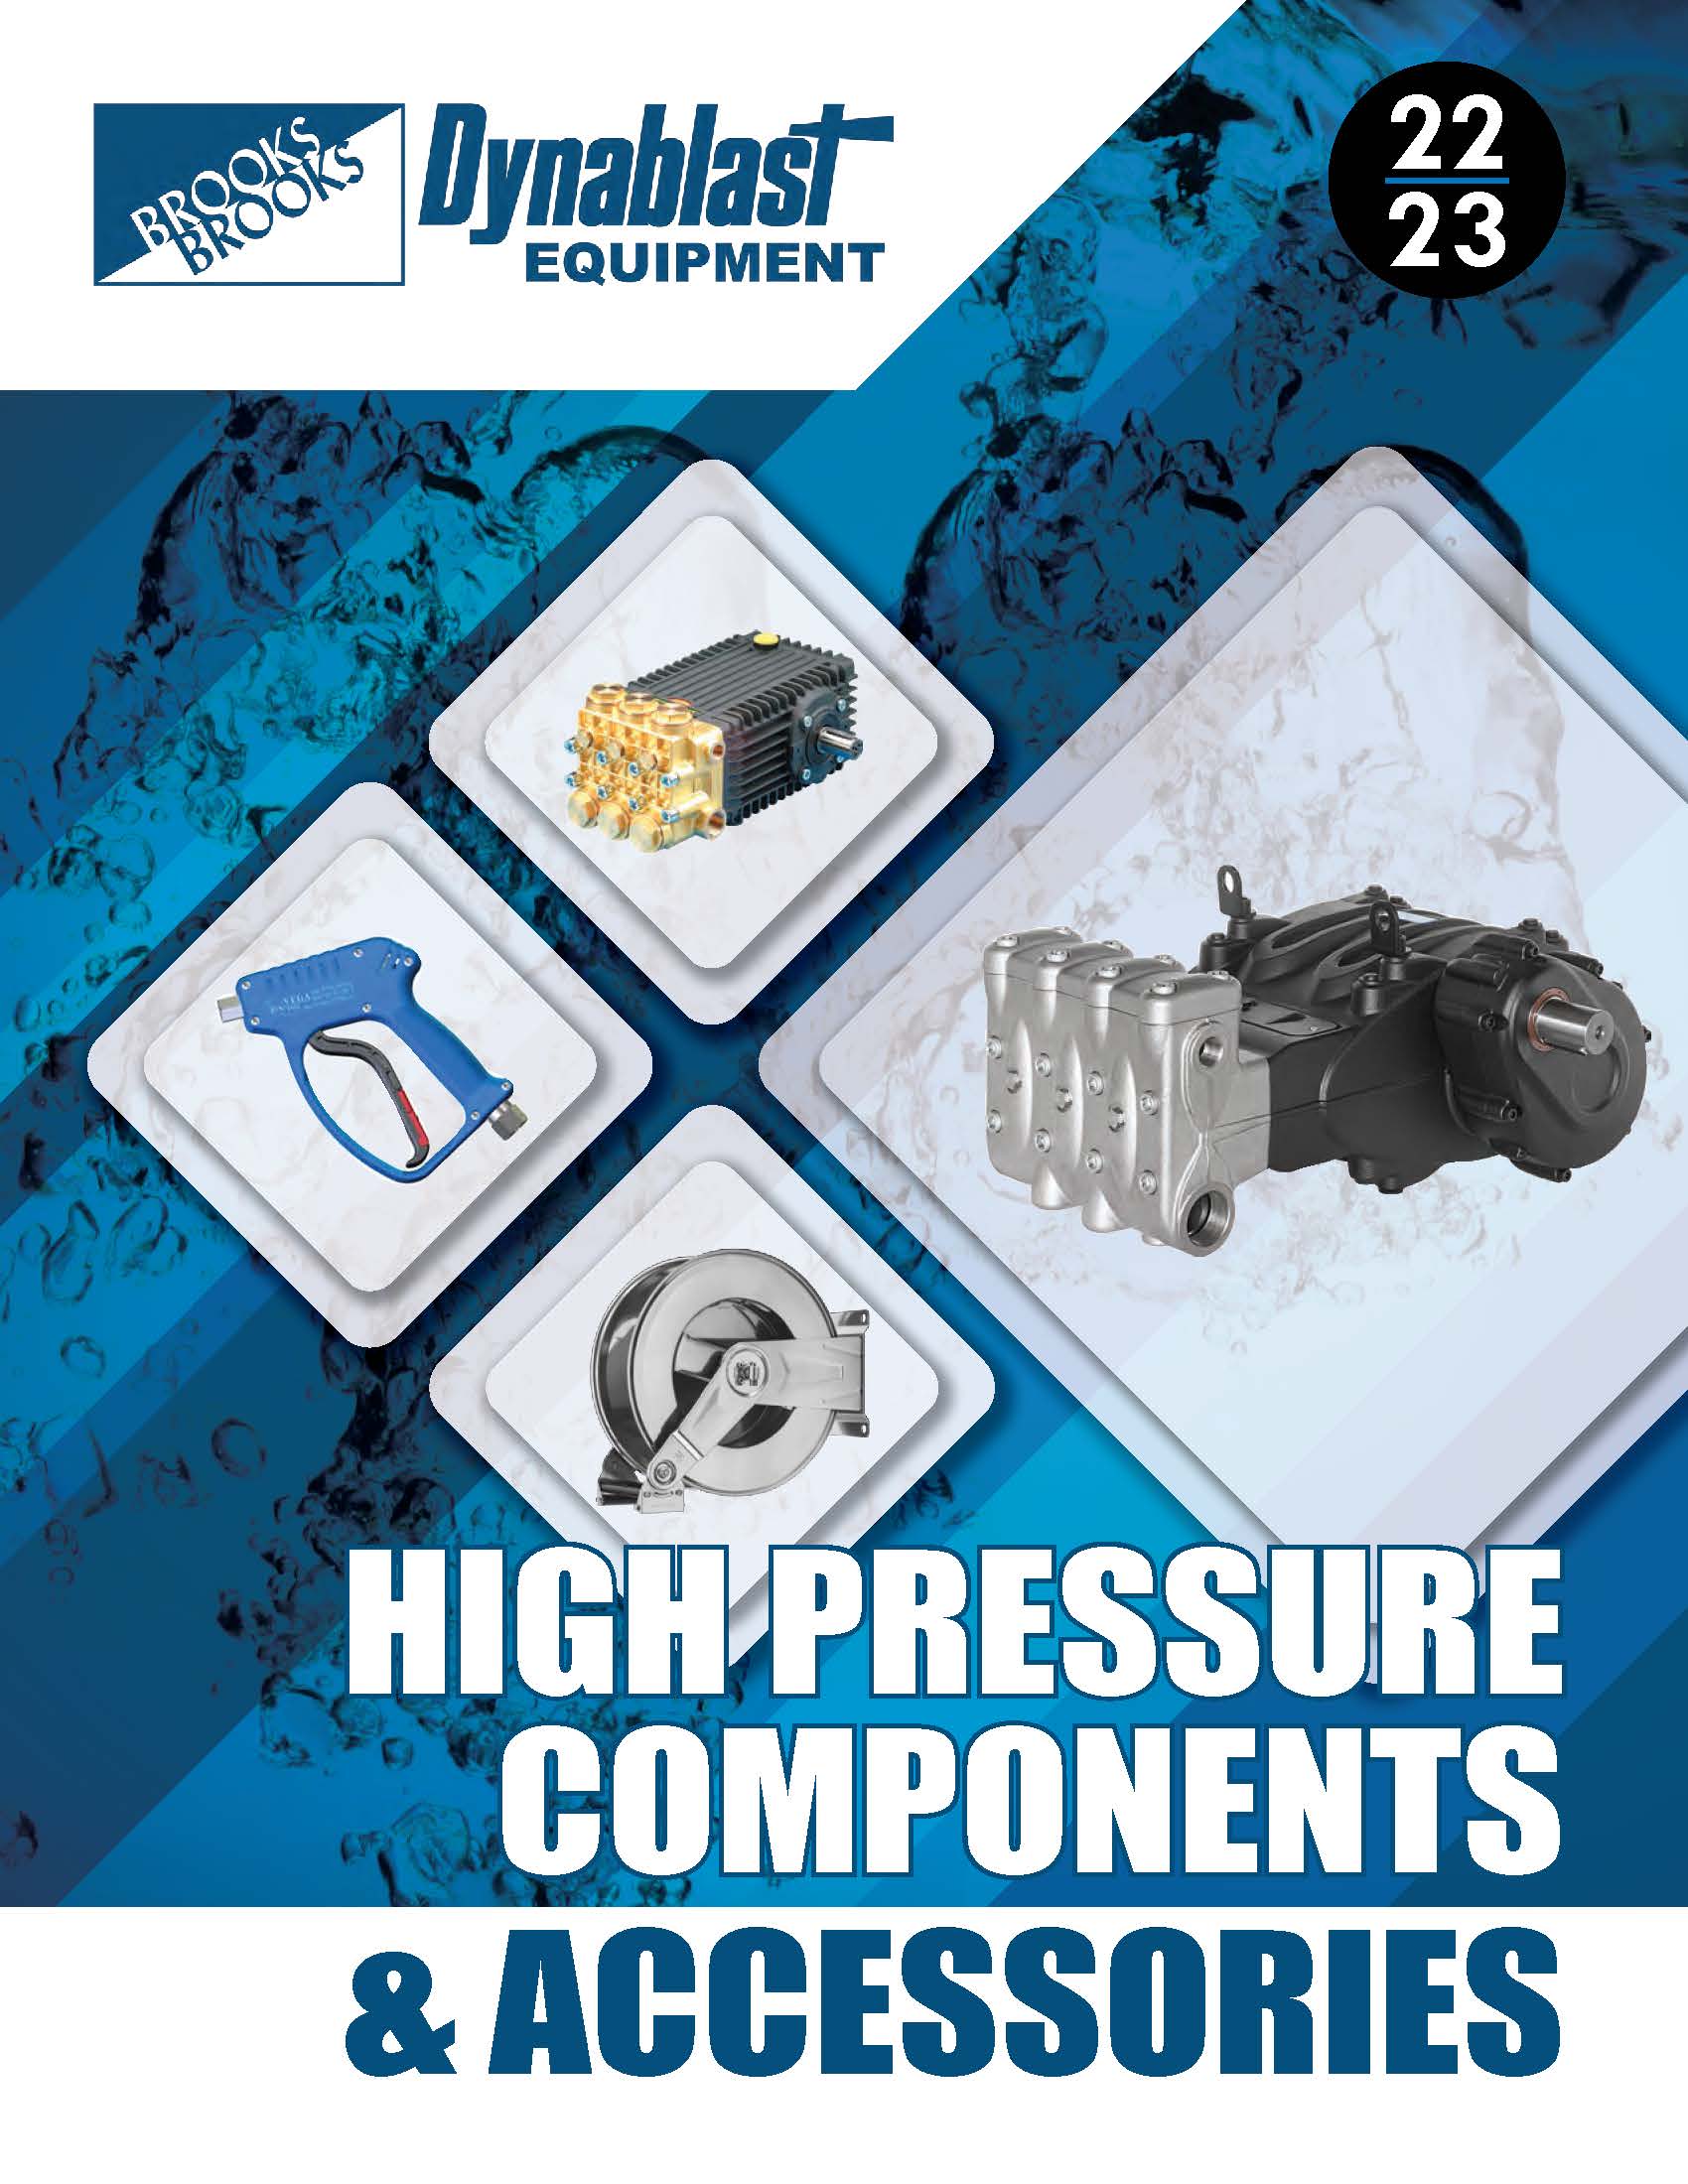  Pressure Wash Components & Accessories